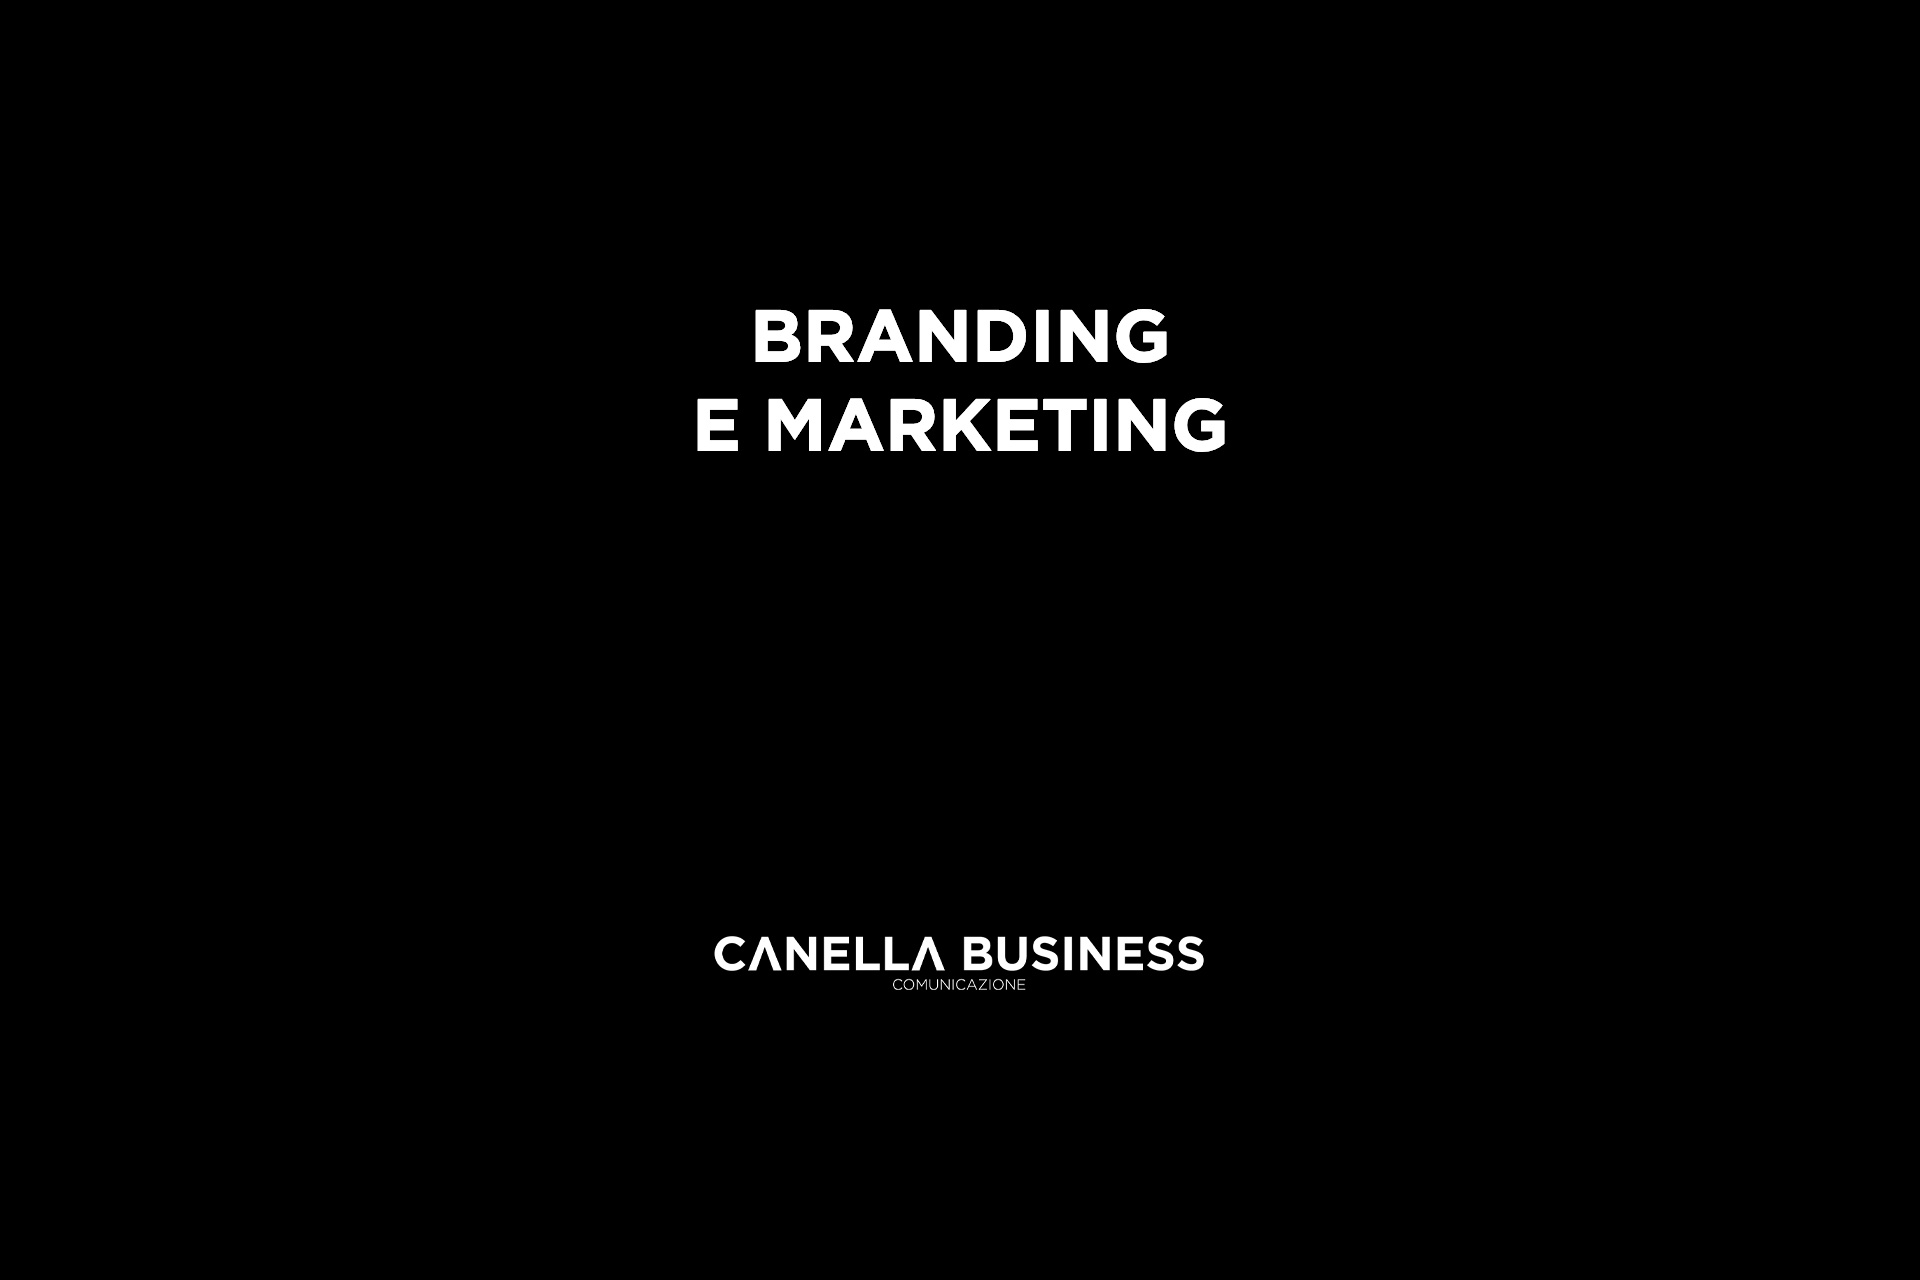 Branding e marketing